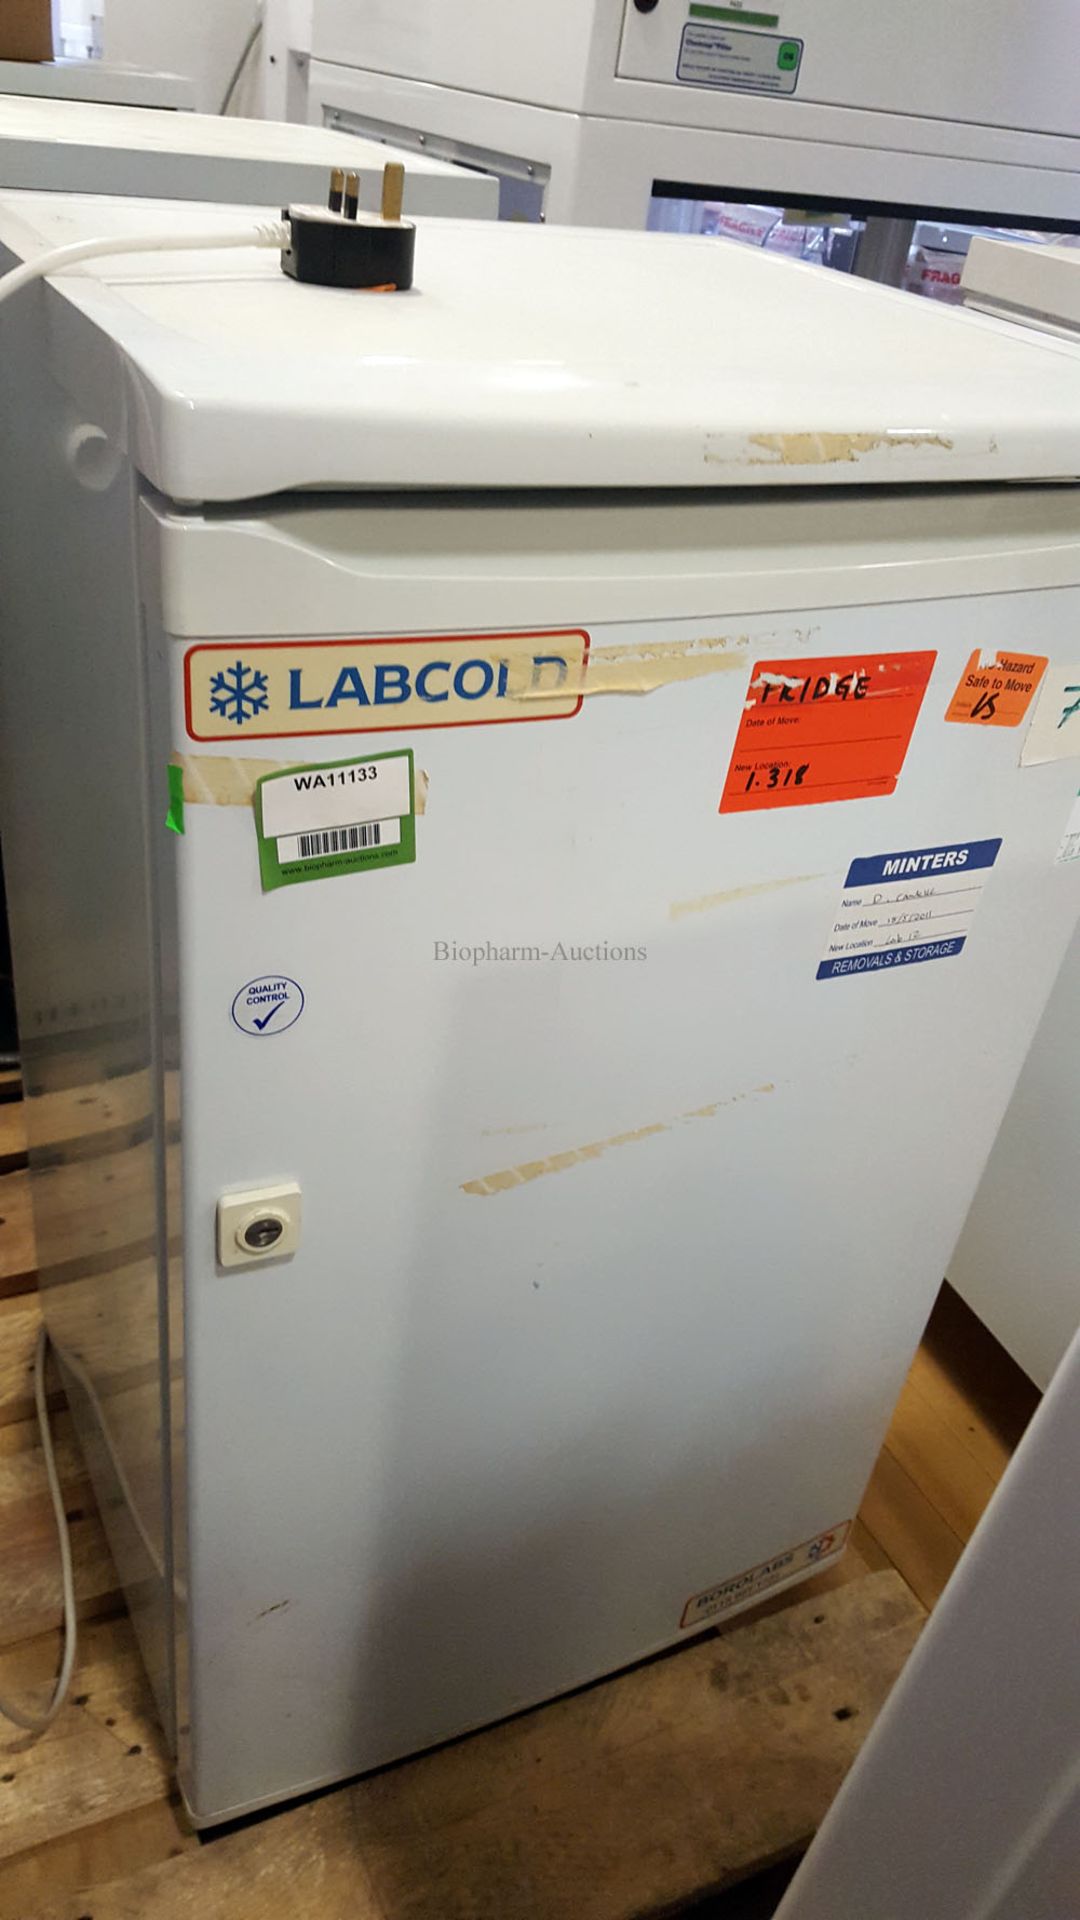 Labcold fridge (Ref: WA11133)